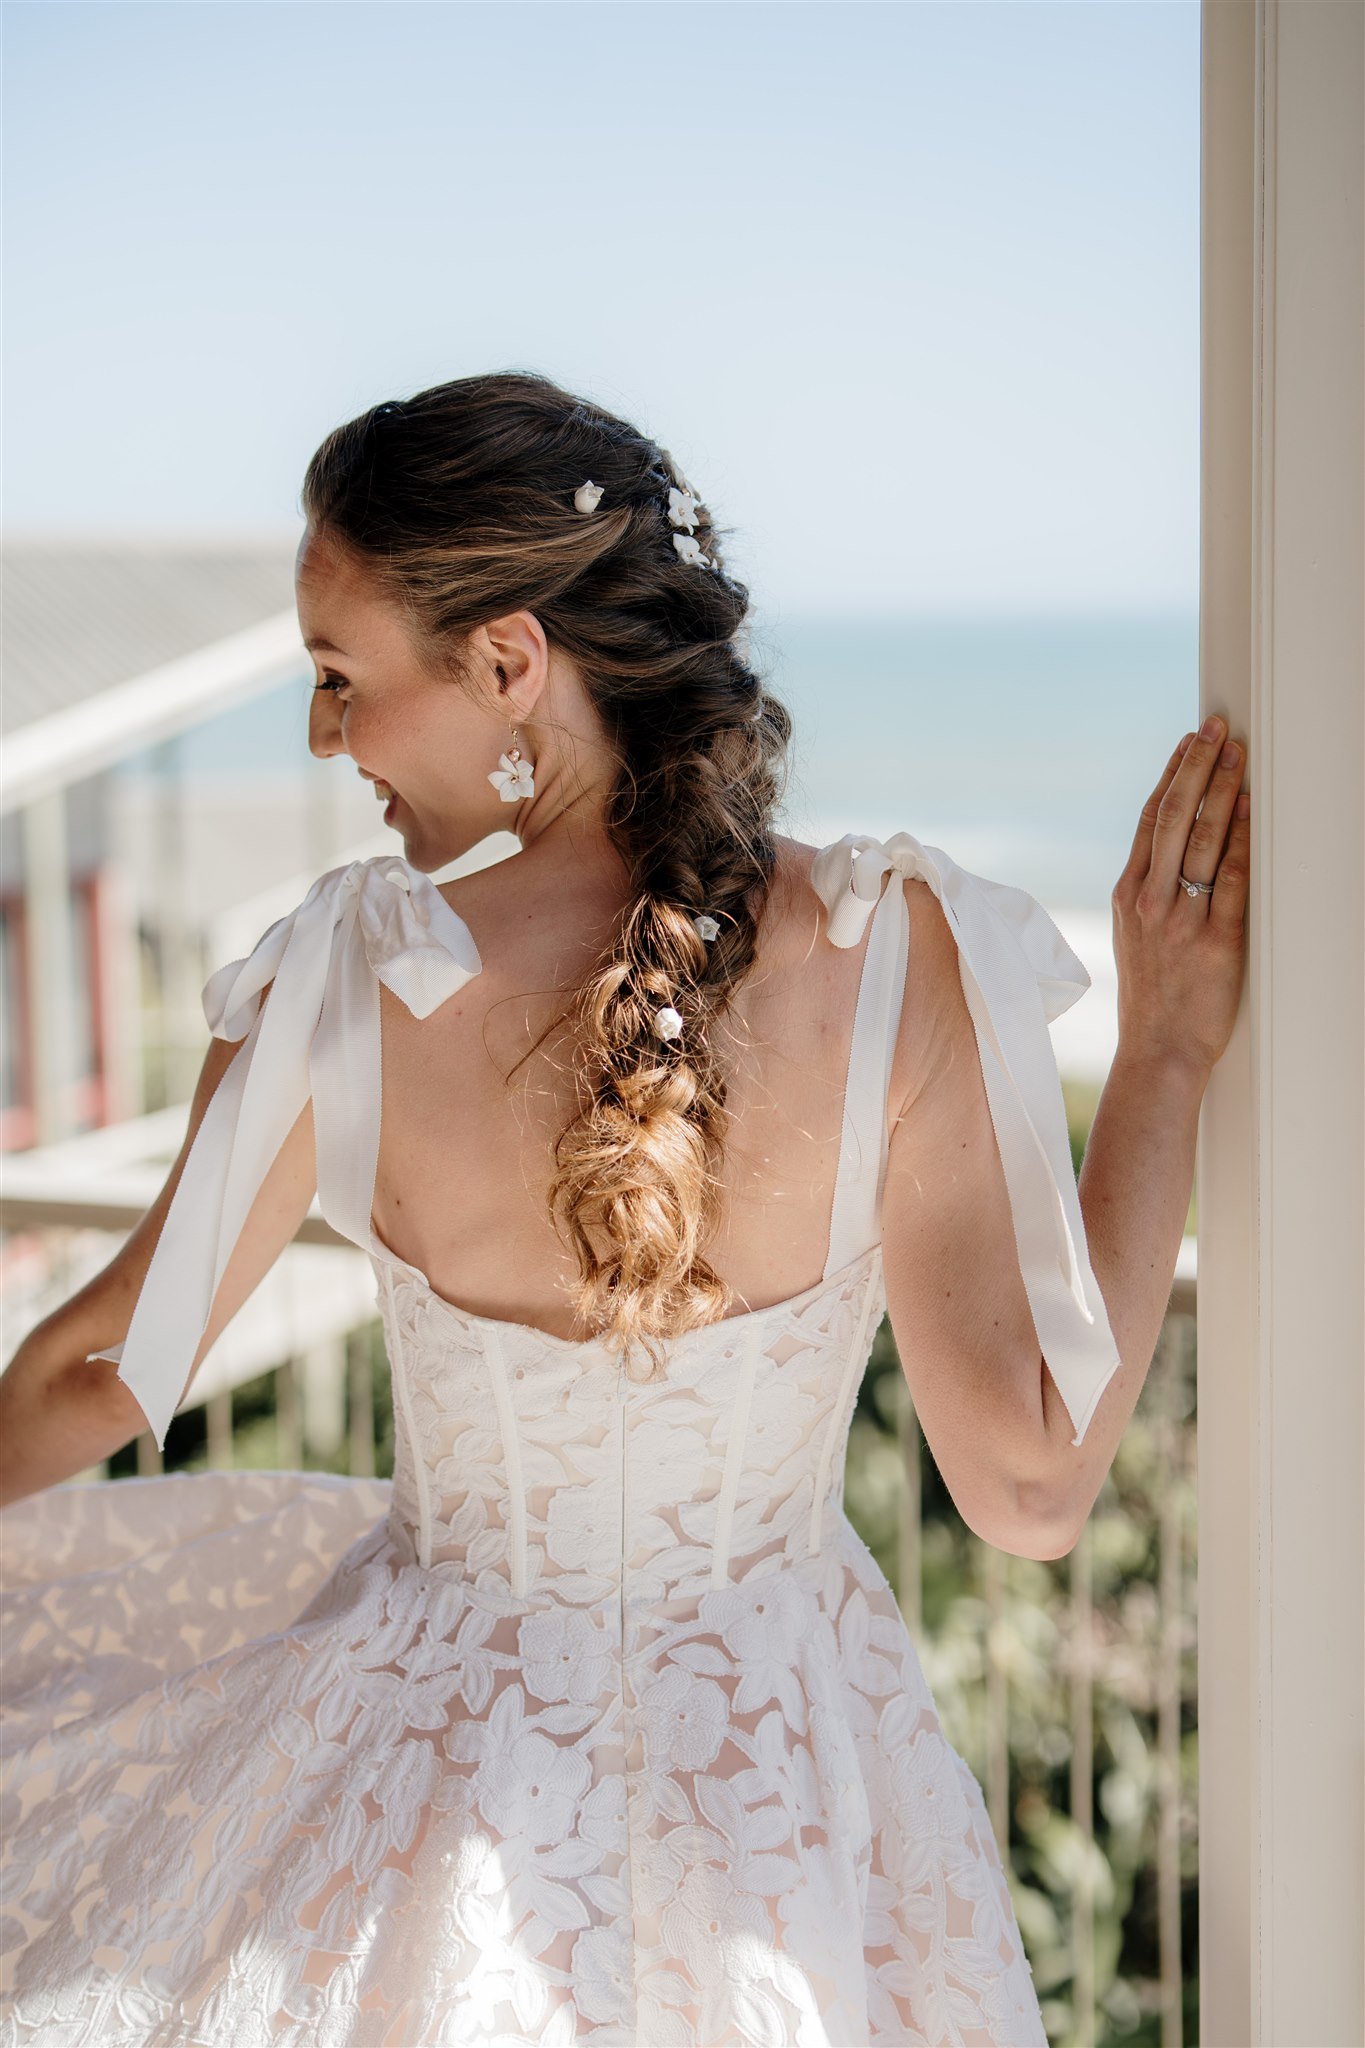 castaways-NZ-new-zealand-auckland-wedding-photographer-photography-videography-film-dear-white-productions-best-venue-waiuku-engagement-elopement-style-beach-intimate-miss-chloe-gown-dress (4).jpg